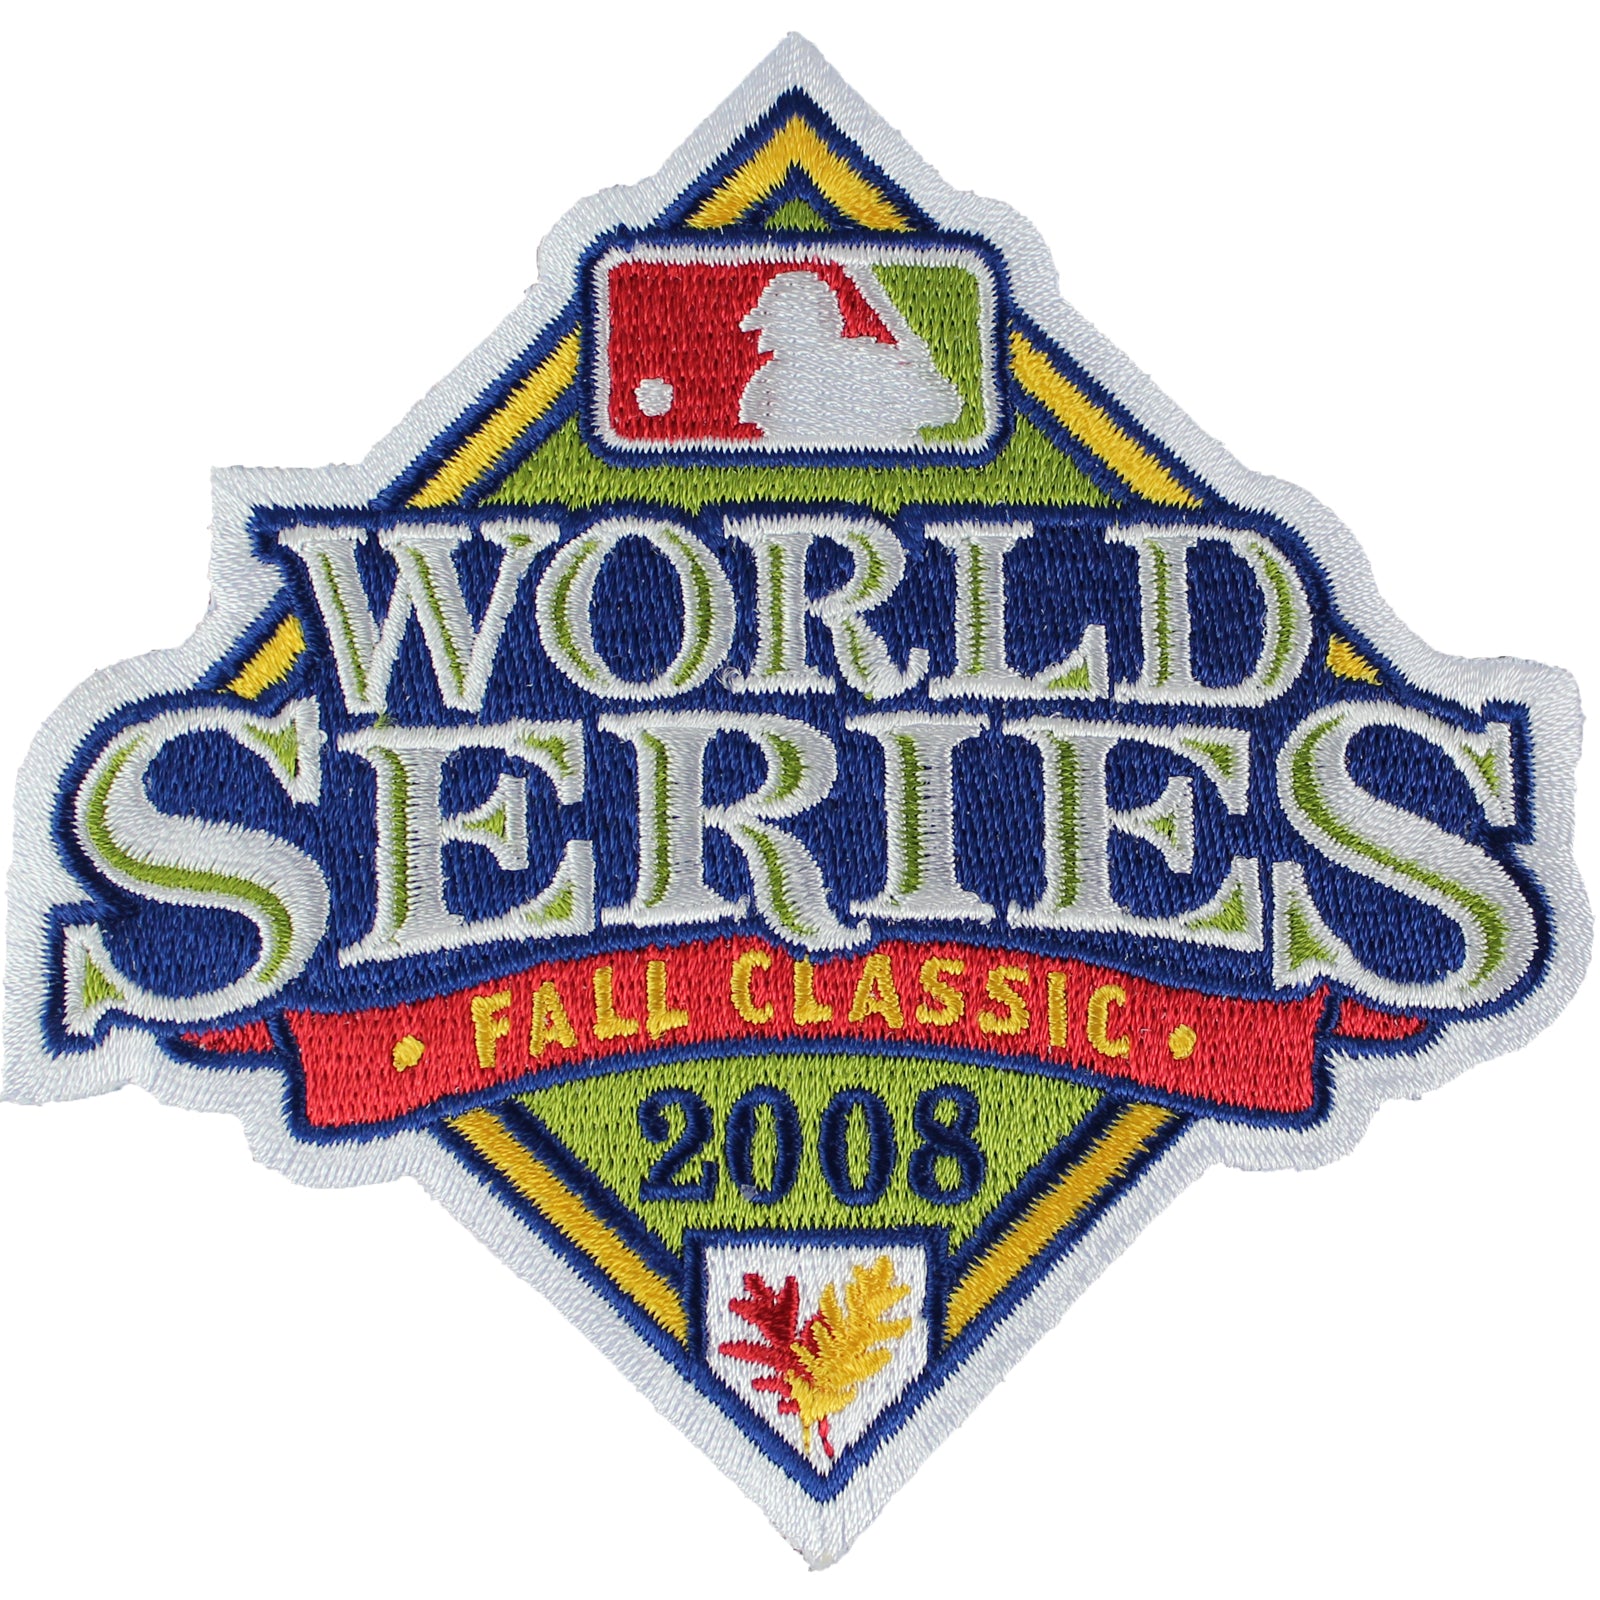 Rays vs. Philadelphia Phillies Series Preview: 2008 World Series Rematch -  DRaysBay